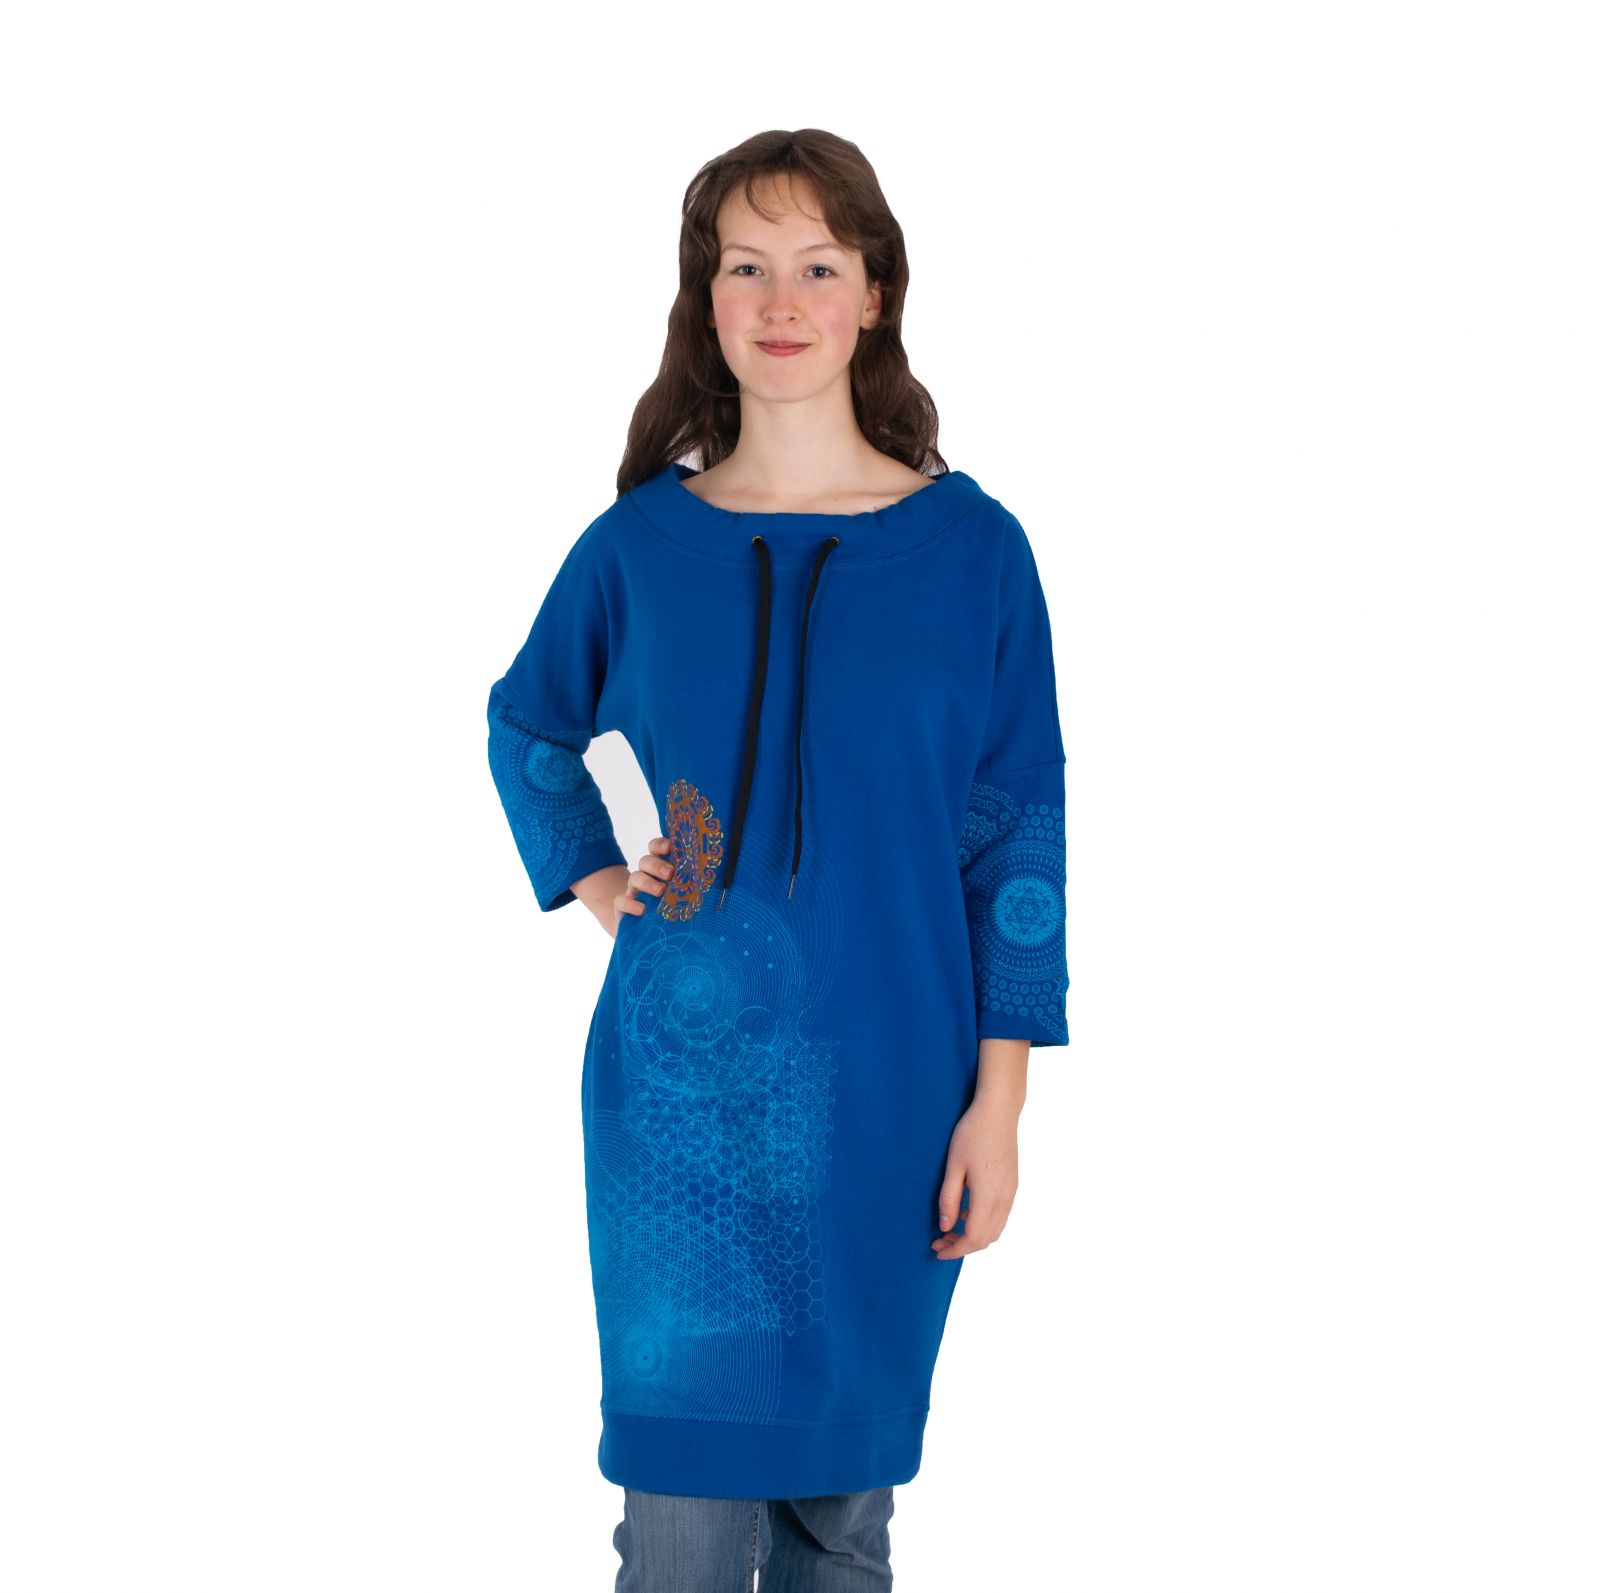 Sweatshirt dress with mandalas Alisha Blue Nepal